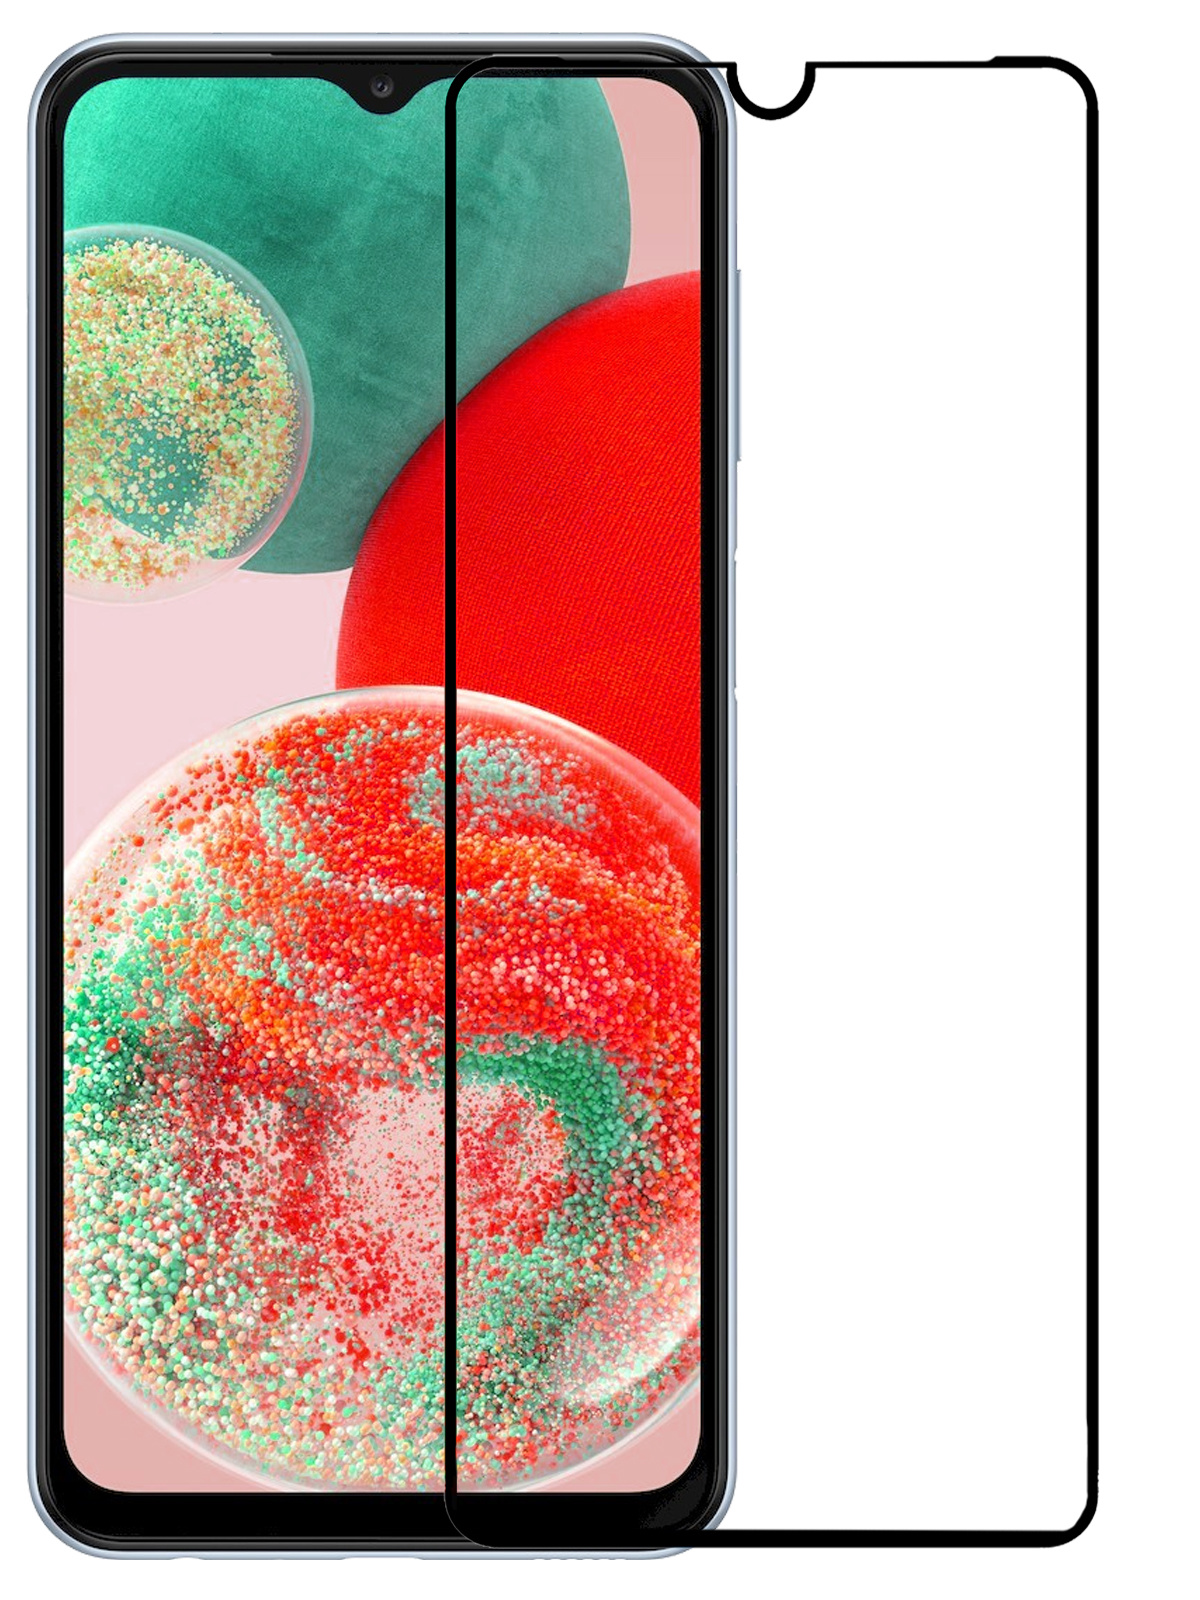 Samsung Galaxy A23 Screenprotector Tempered Glass Full Cover Gehard Glas Beschermglas